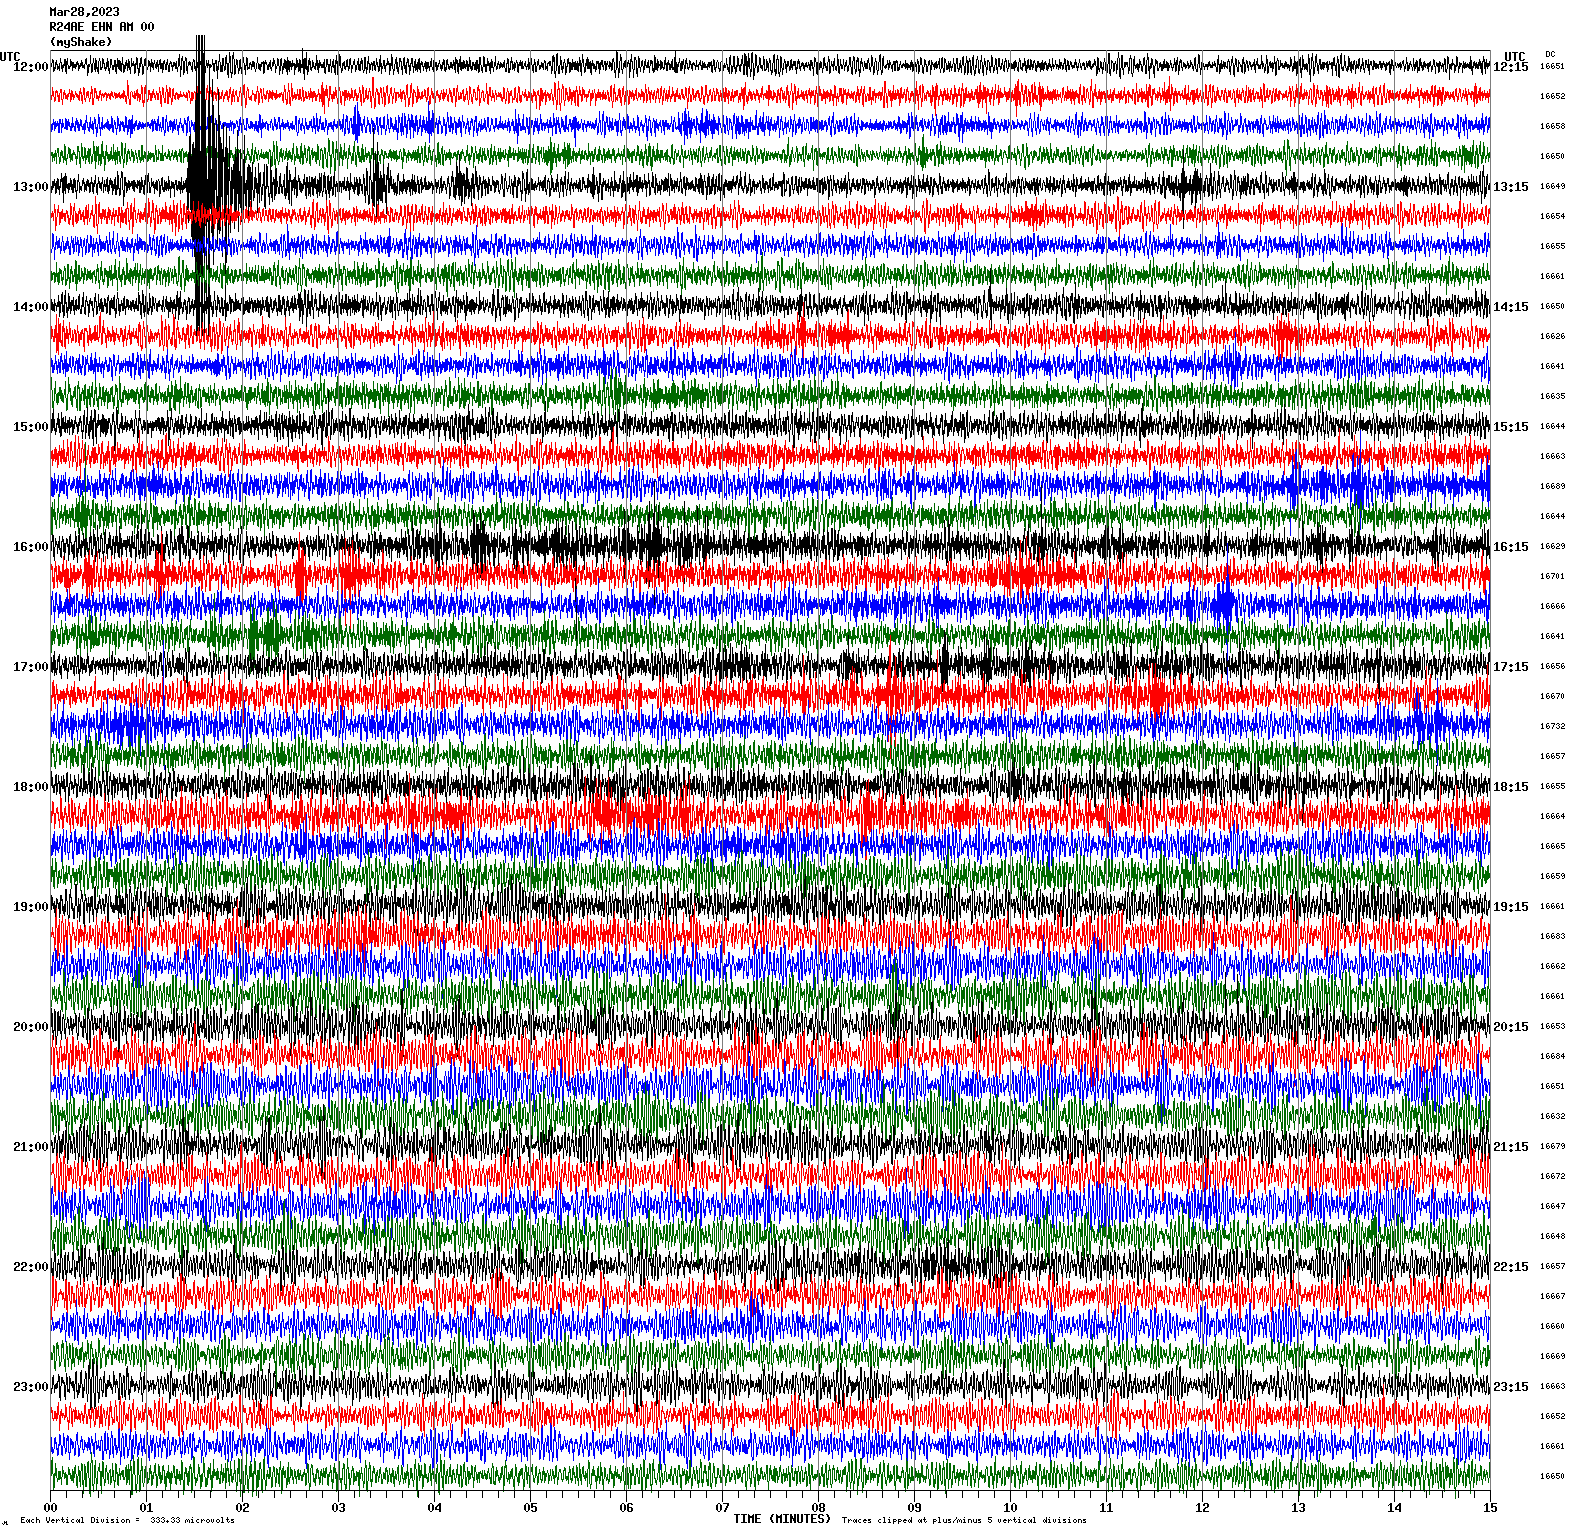 /seismic-data/R24AE/R24AE_EHN_AM_00.2023032812.gif